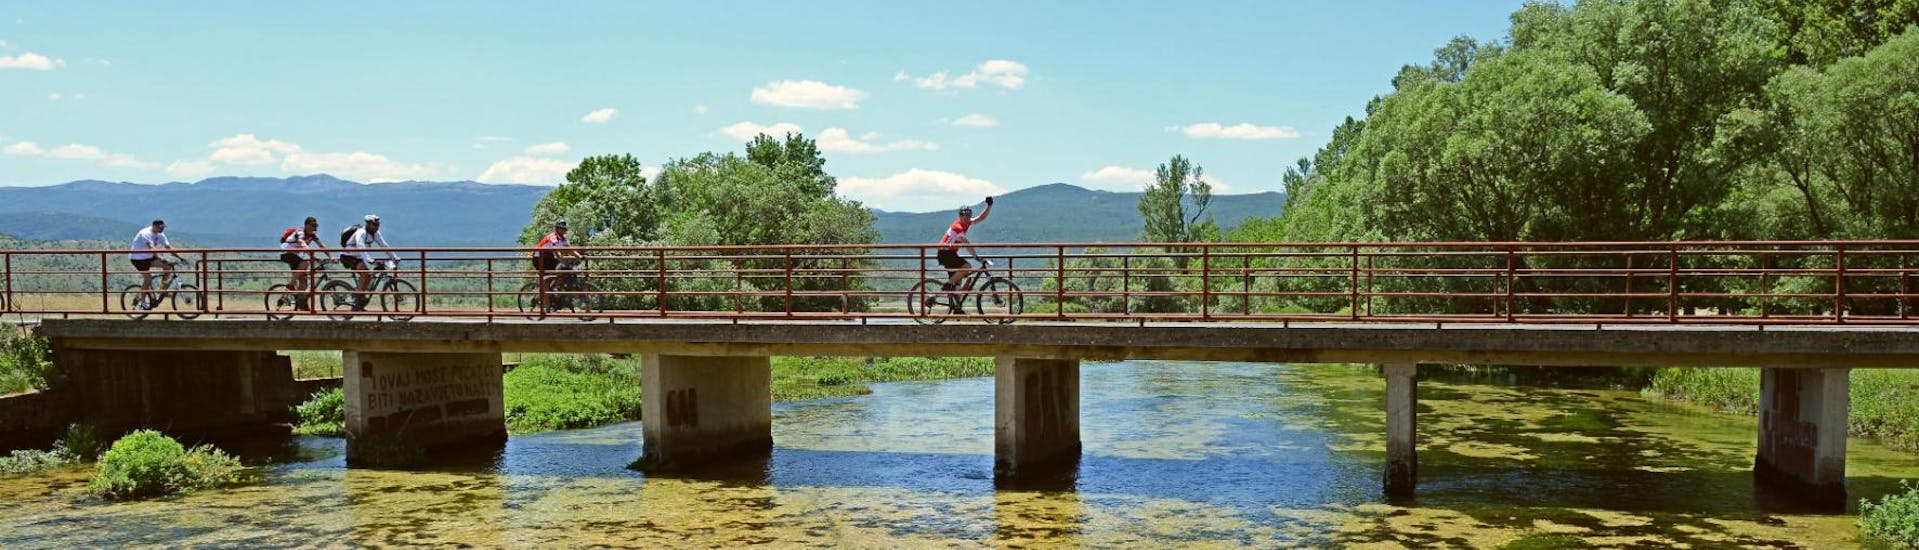 Sportliche Mountainbike-Tour in Sinj - Cetina.